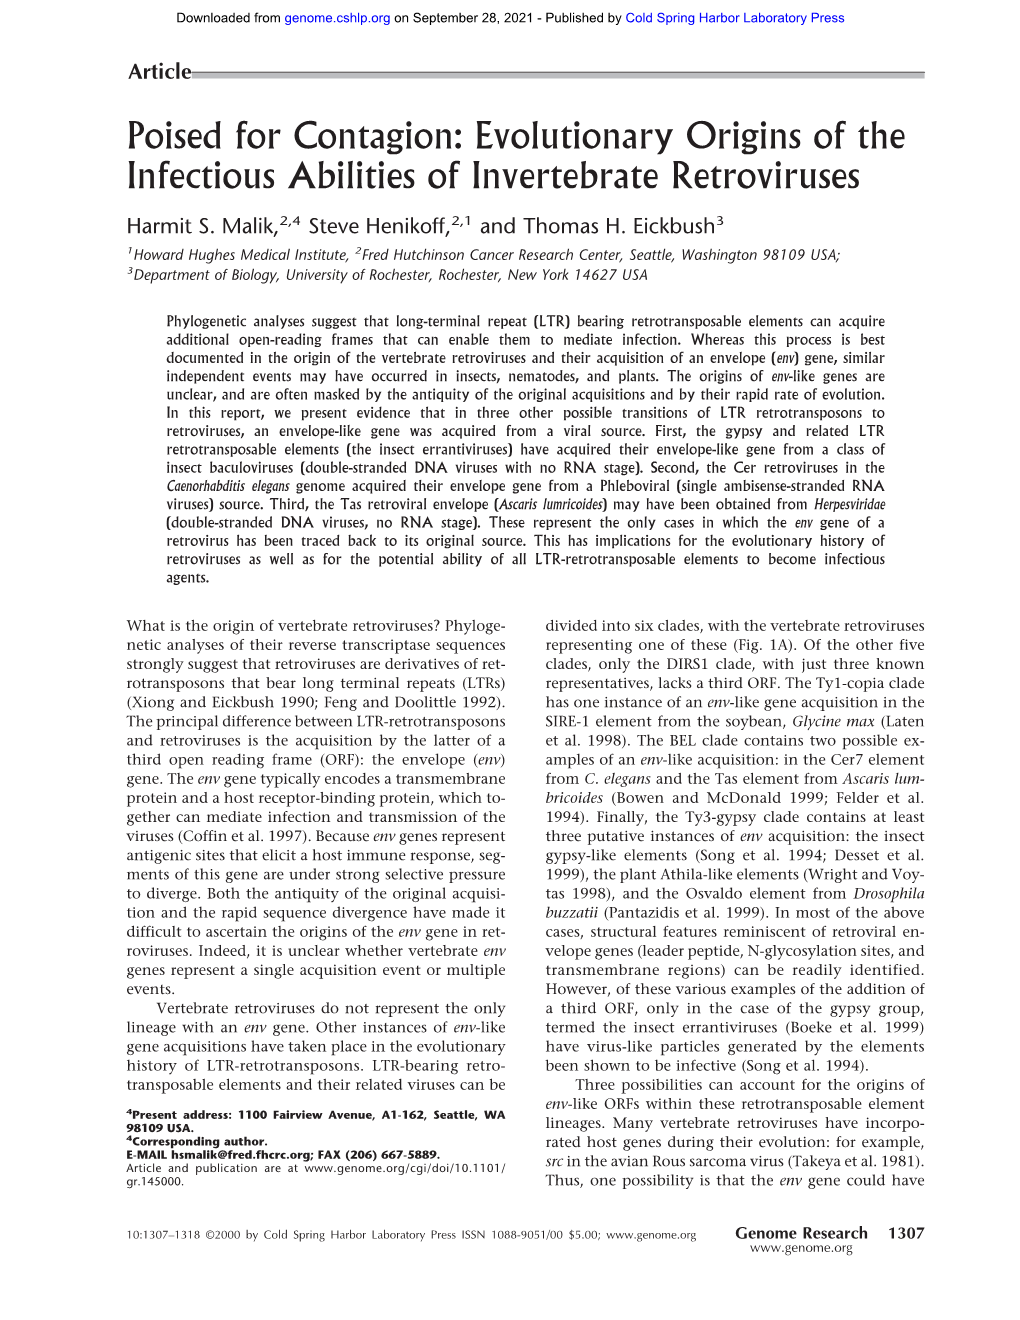 Evolutionary Origins of the Infectious Abilities of Invertebrate Retroviruses